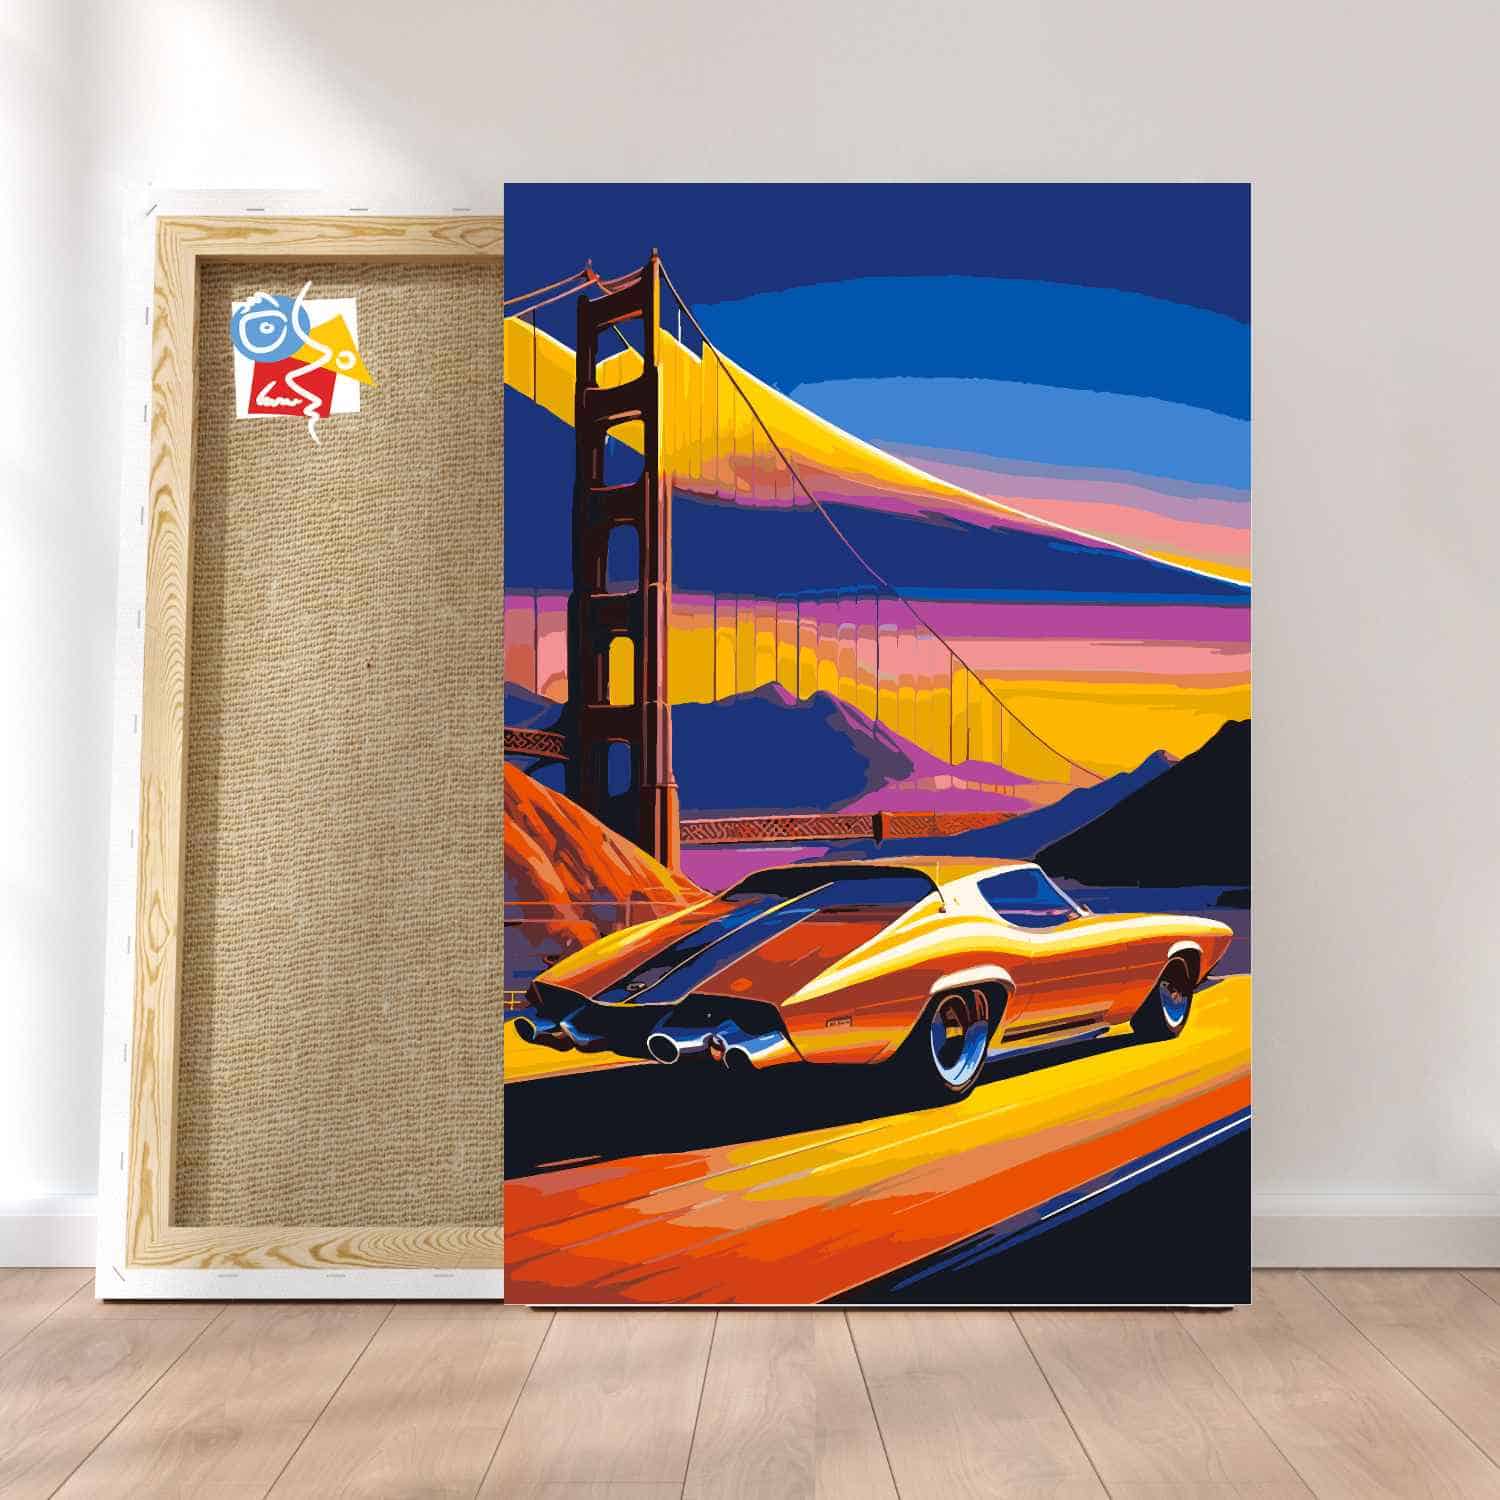 Car at the Golden Gate Bridge